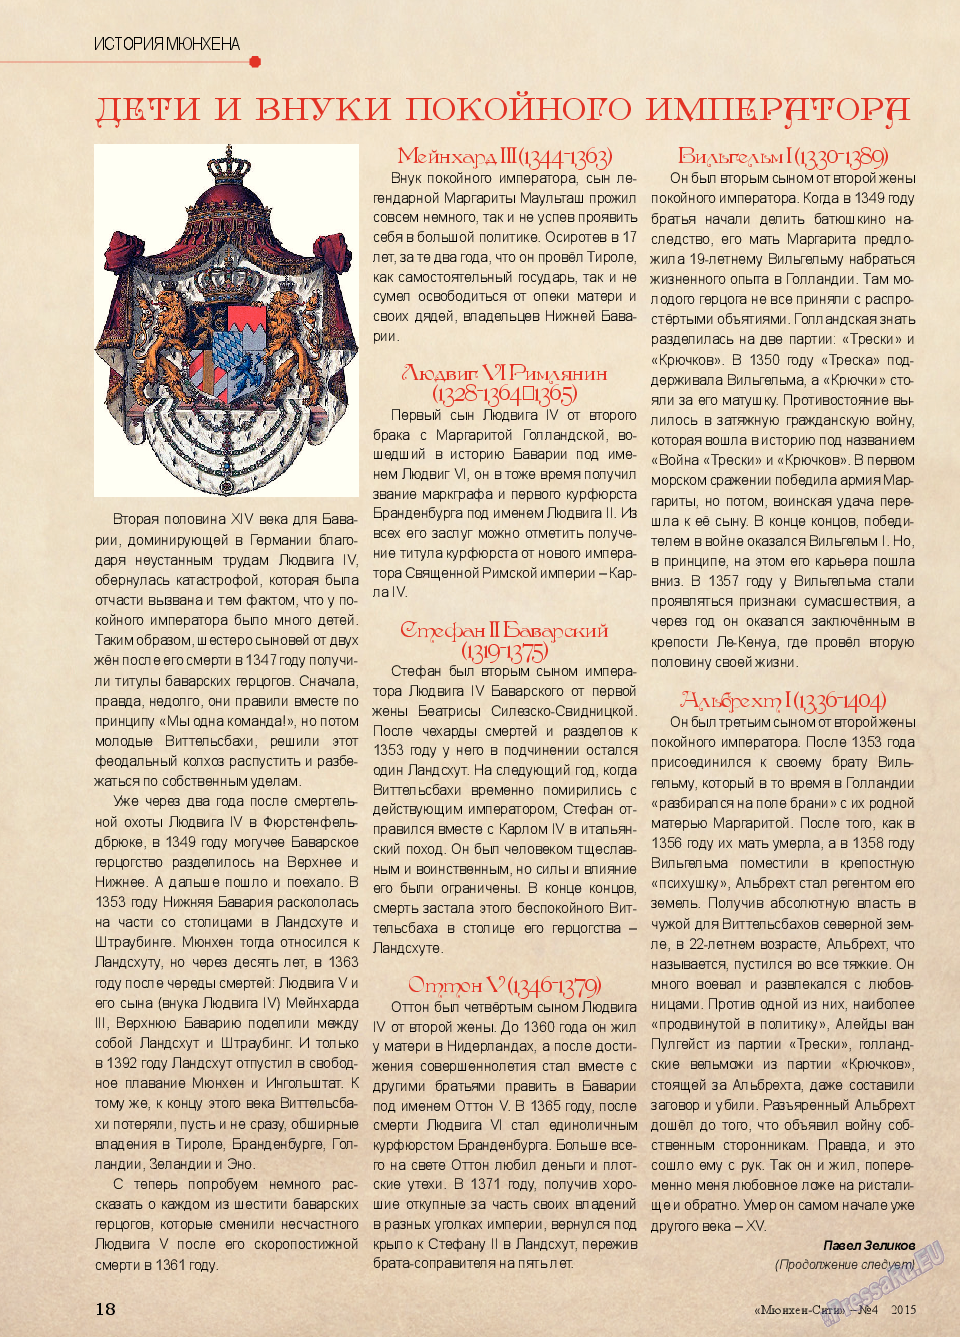 Мюнхен-сити, журнал. 2015 №4 стр.18